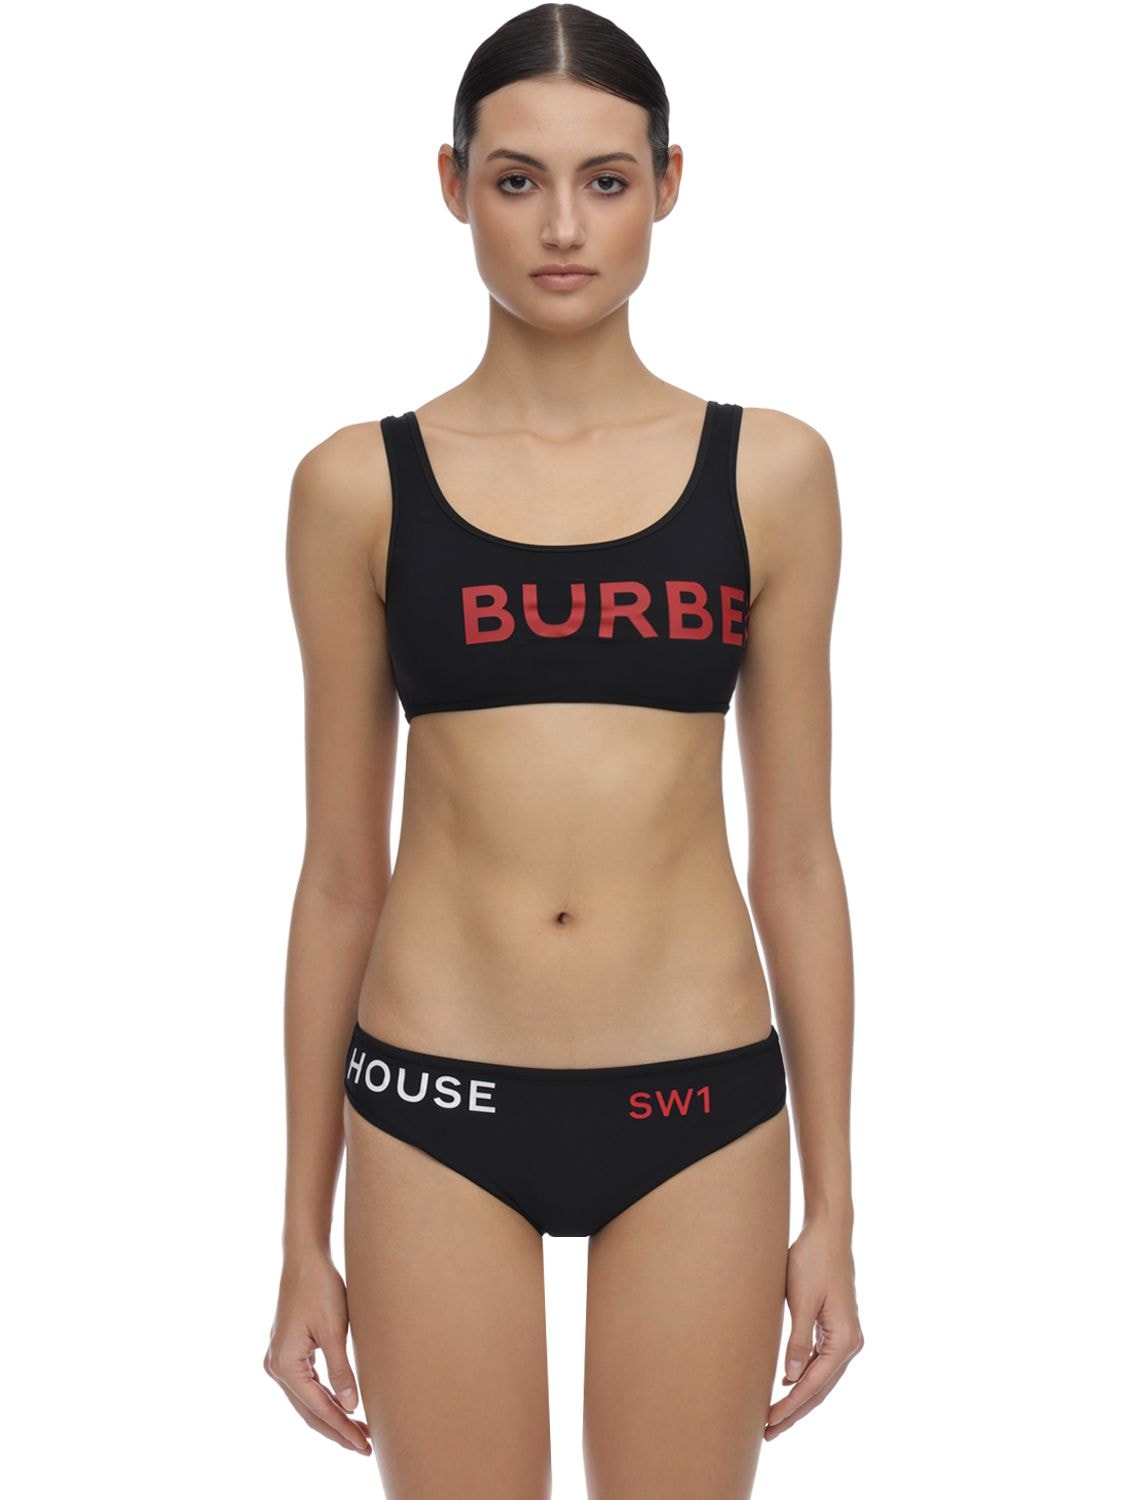 burberry swimsuit 2015